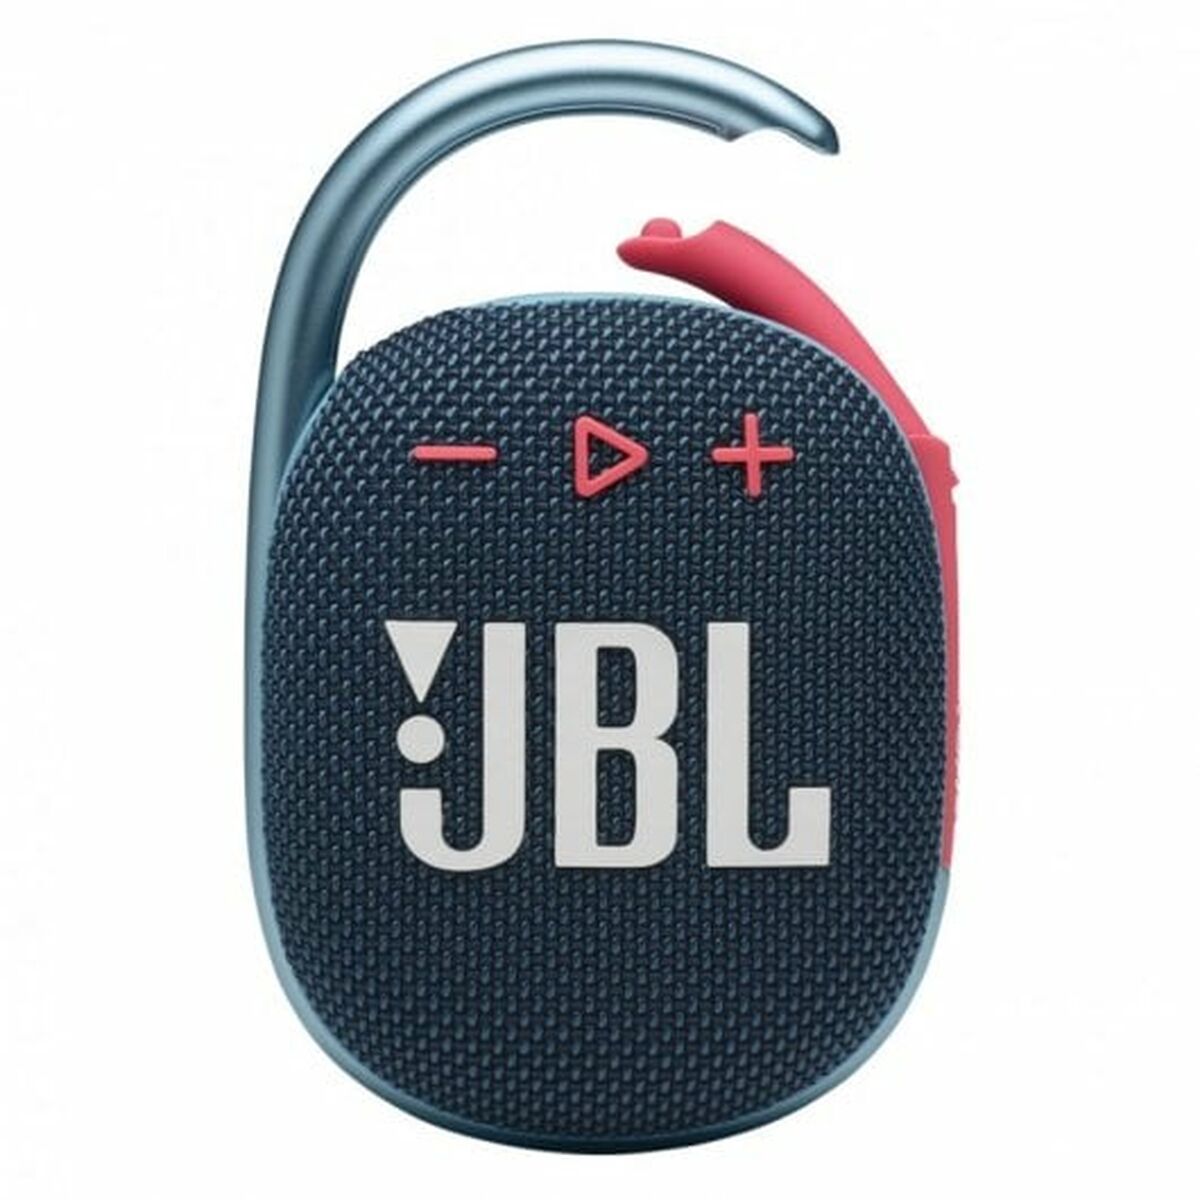 Kaufe Tragbare Bluetooth-Lautsprecher JBL Clip 4 5 W bei AWK Flagship um € 96.00